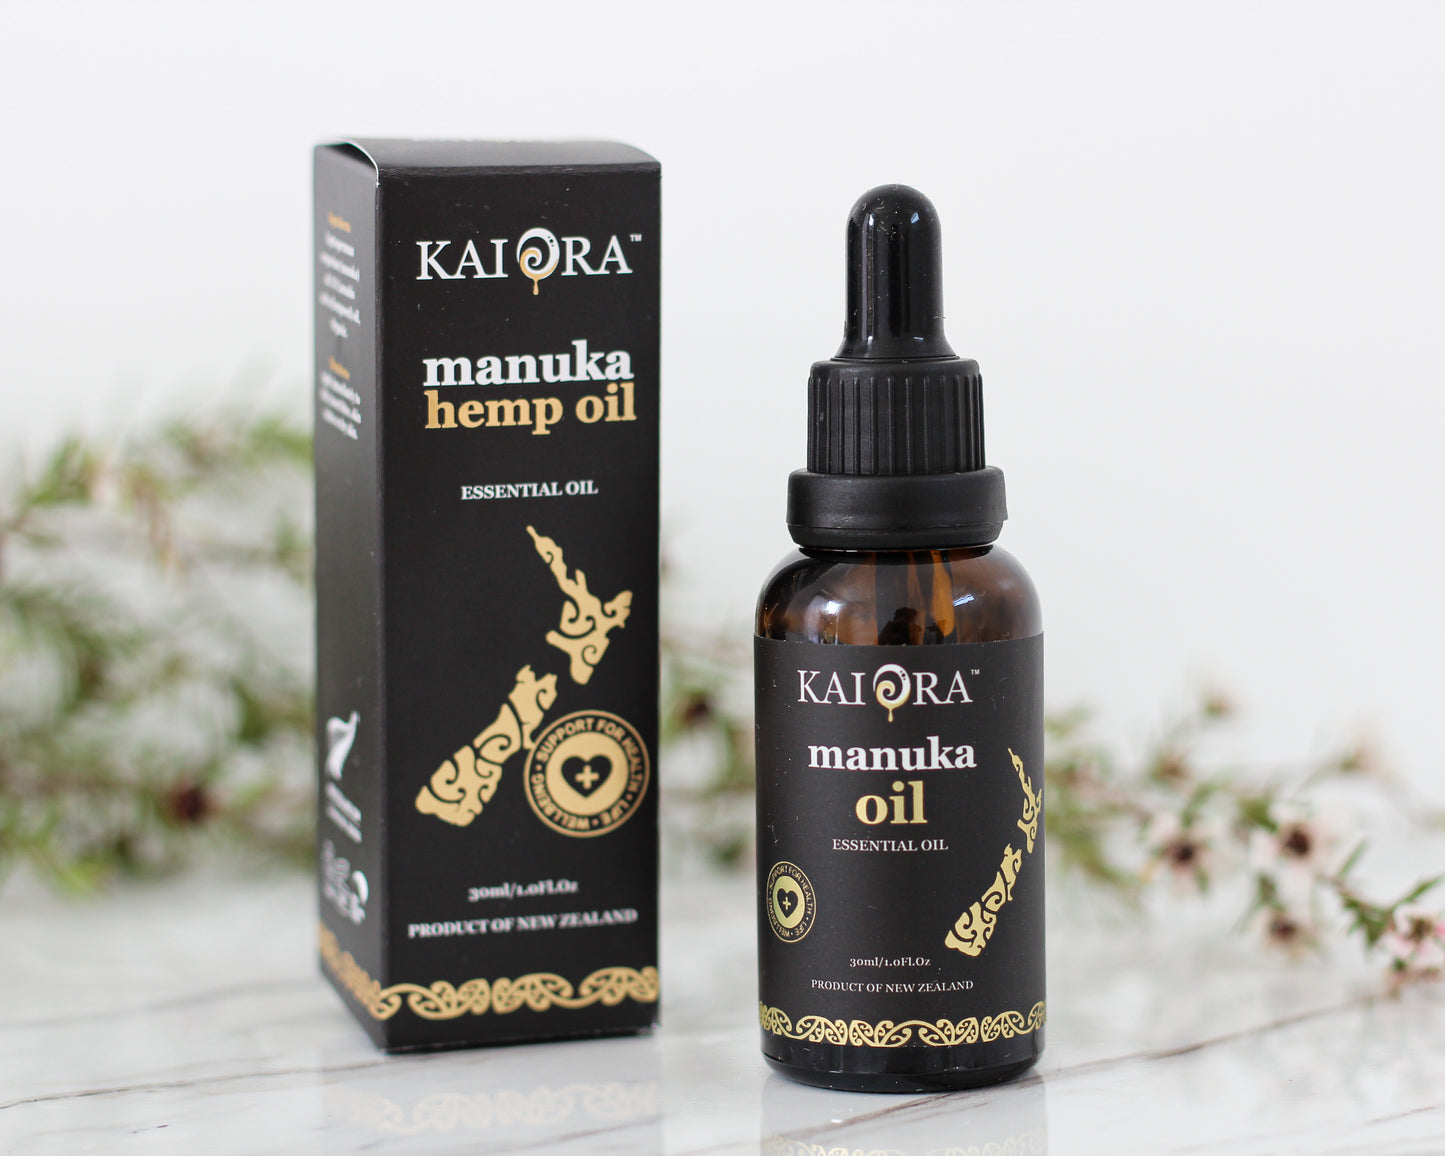 New Product Announcement - Kai Ora Mānuka & Hemp Oil - Kai Ora Honey Limited, New Zealand